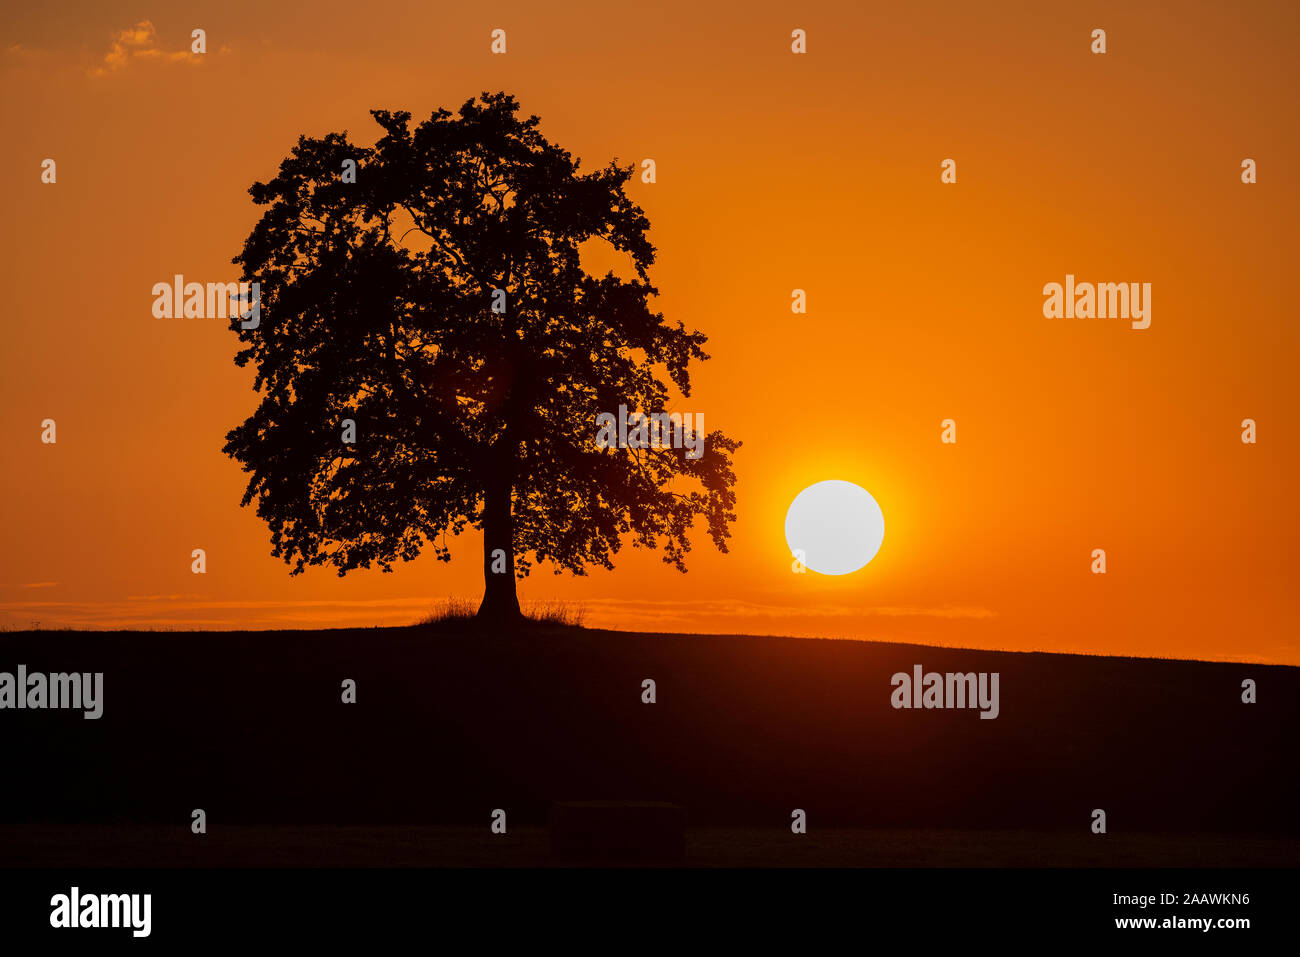 Silhouette oak tree on land against orange sky during sunset, Bavaria, Germany Stock Photo